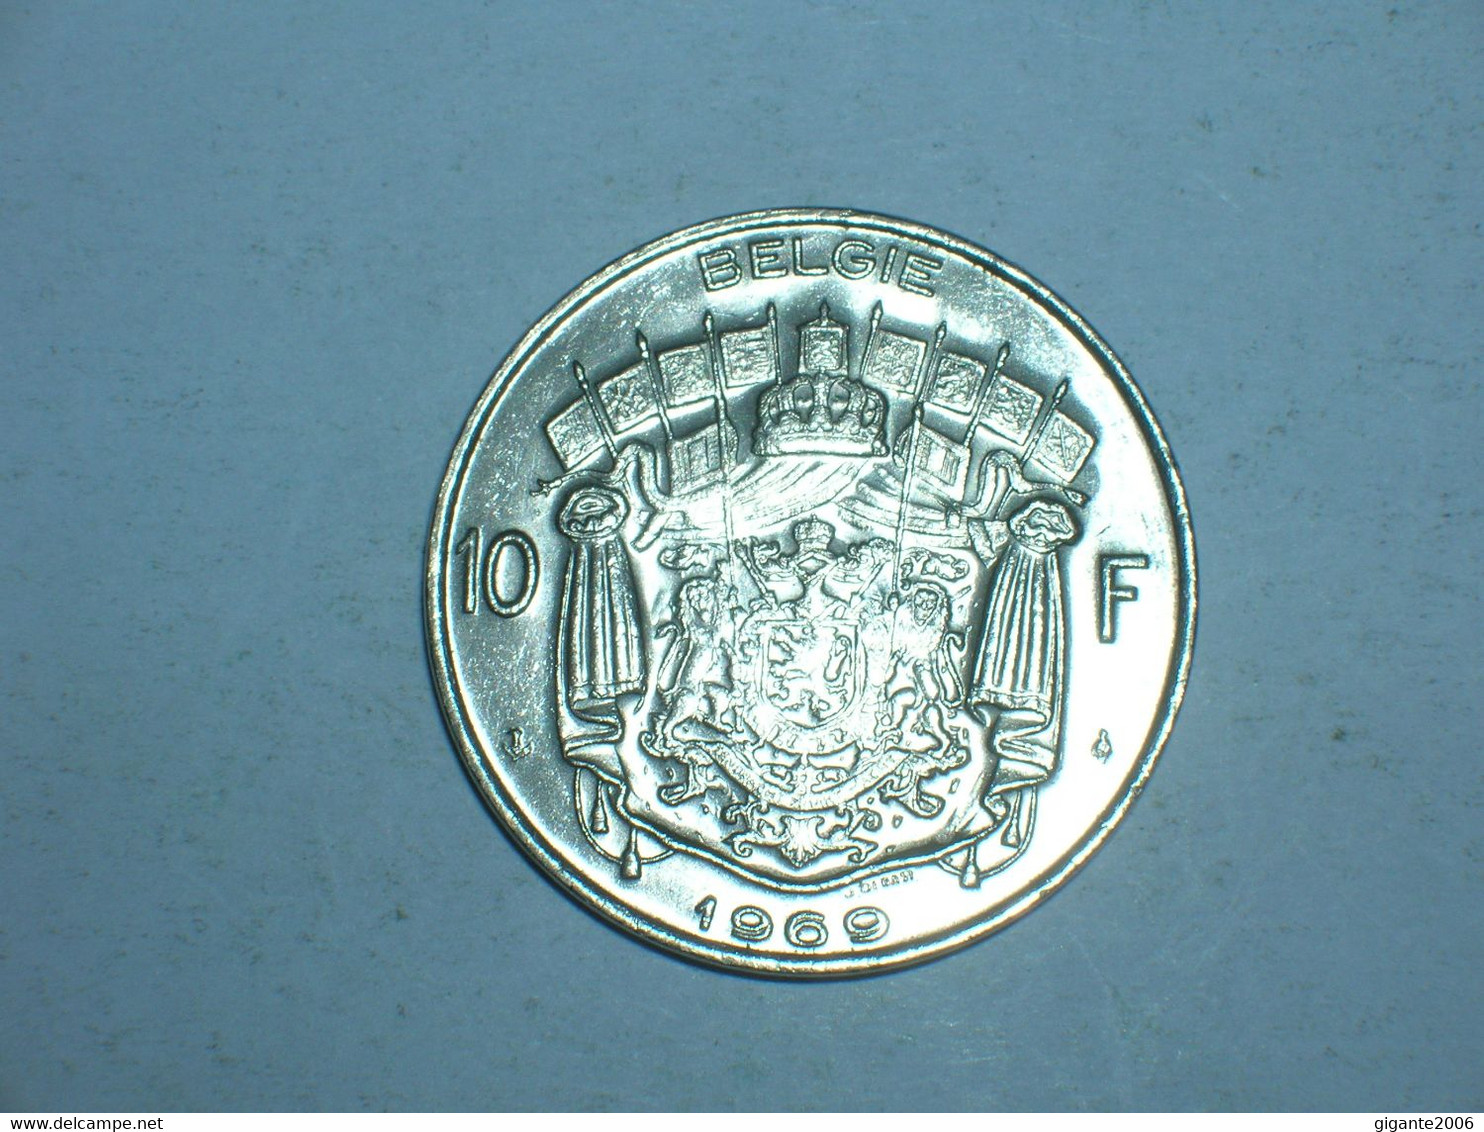 BELGICA 10 FRANCOS 1969 FL  (9255) - 10 Francs